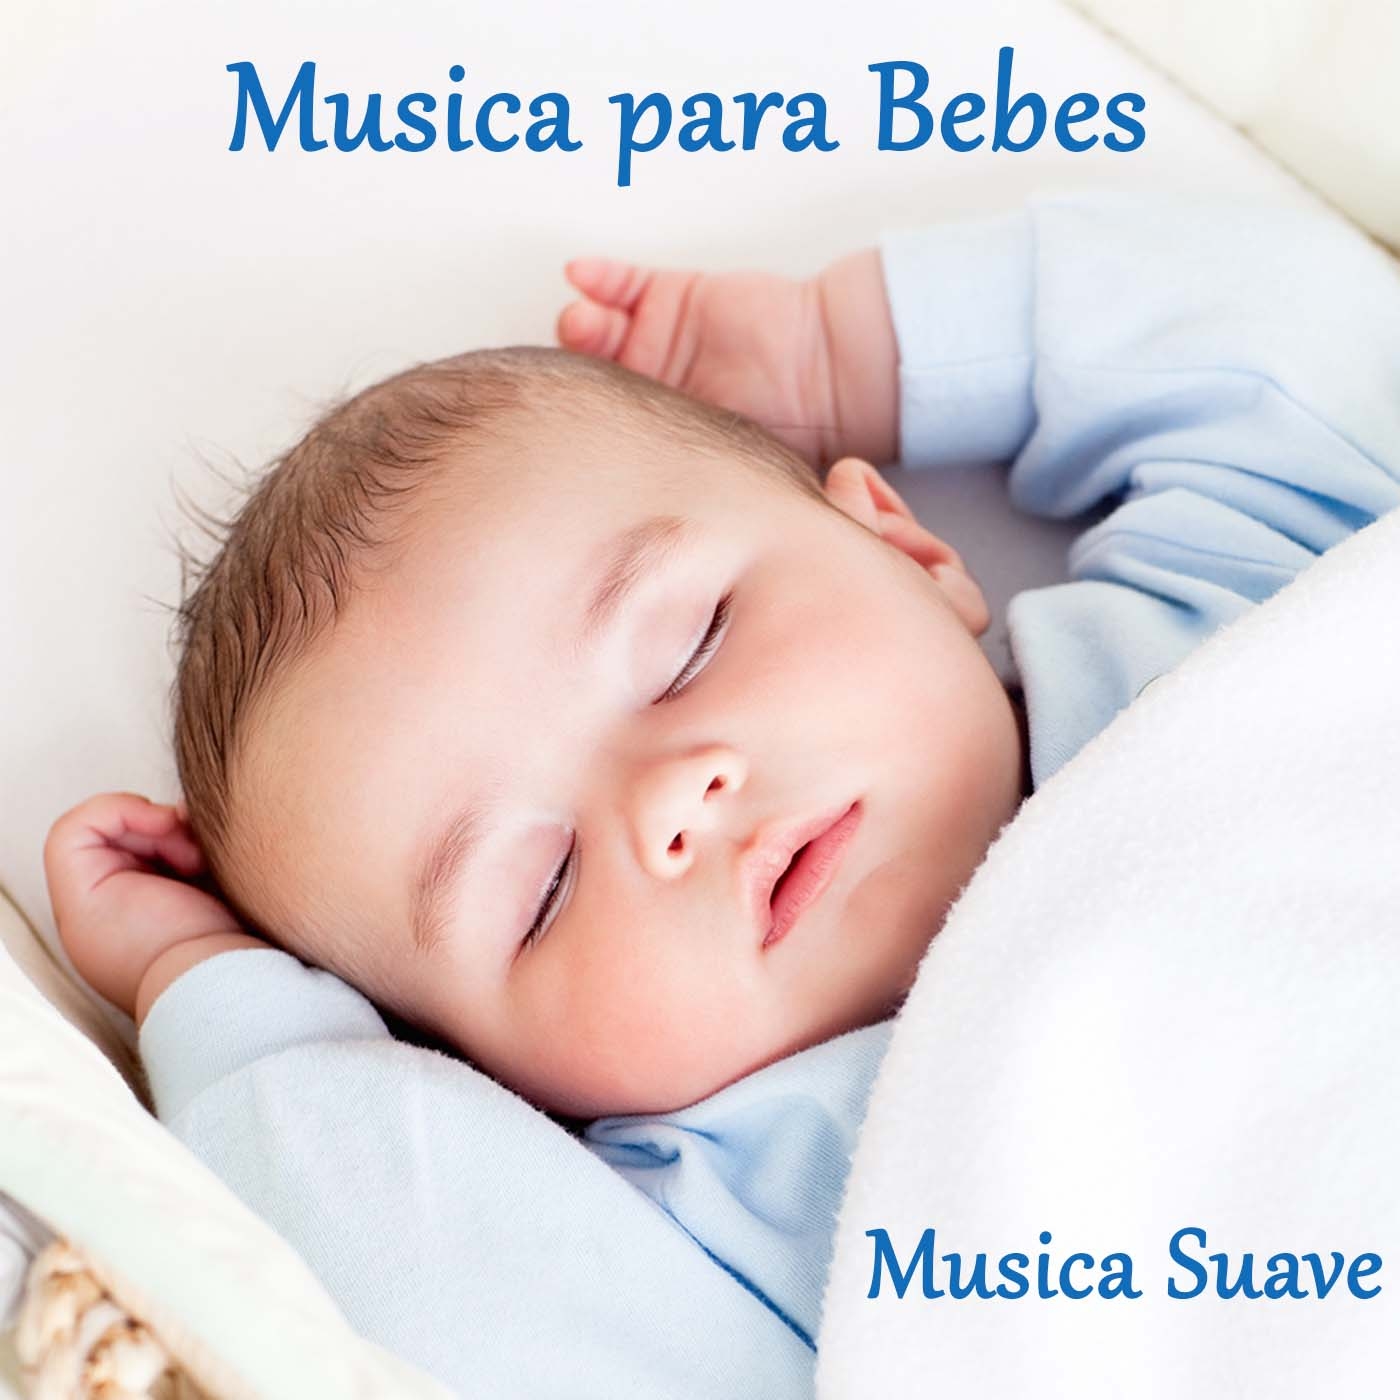 Musica para Bebes: Musica Suave para Relajar los Bebes